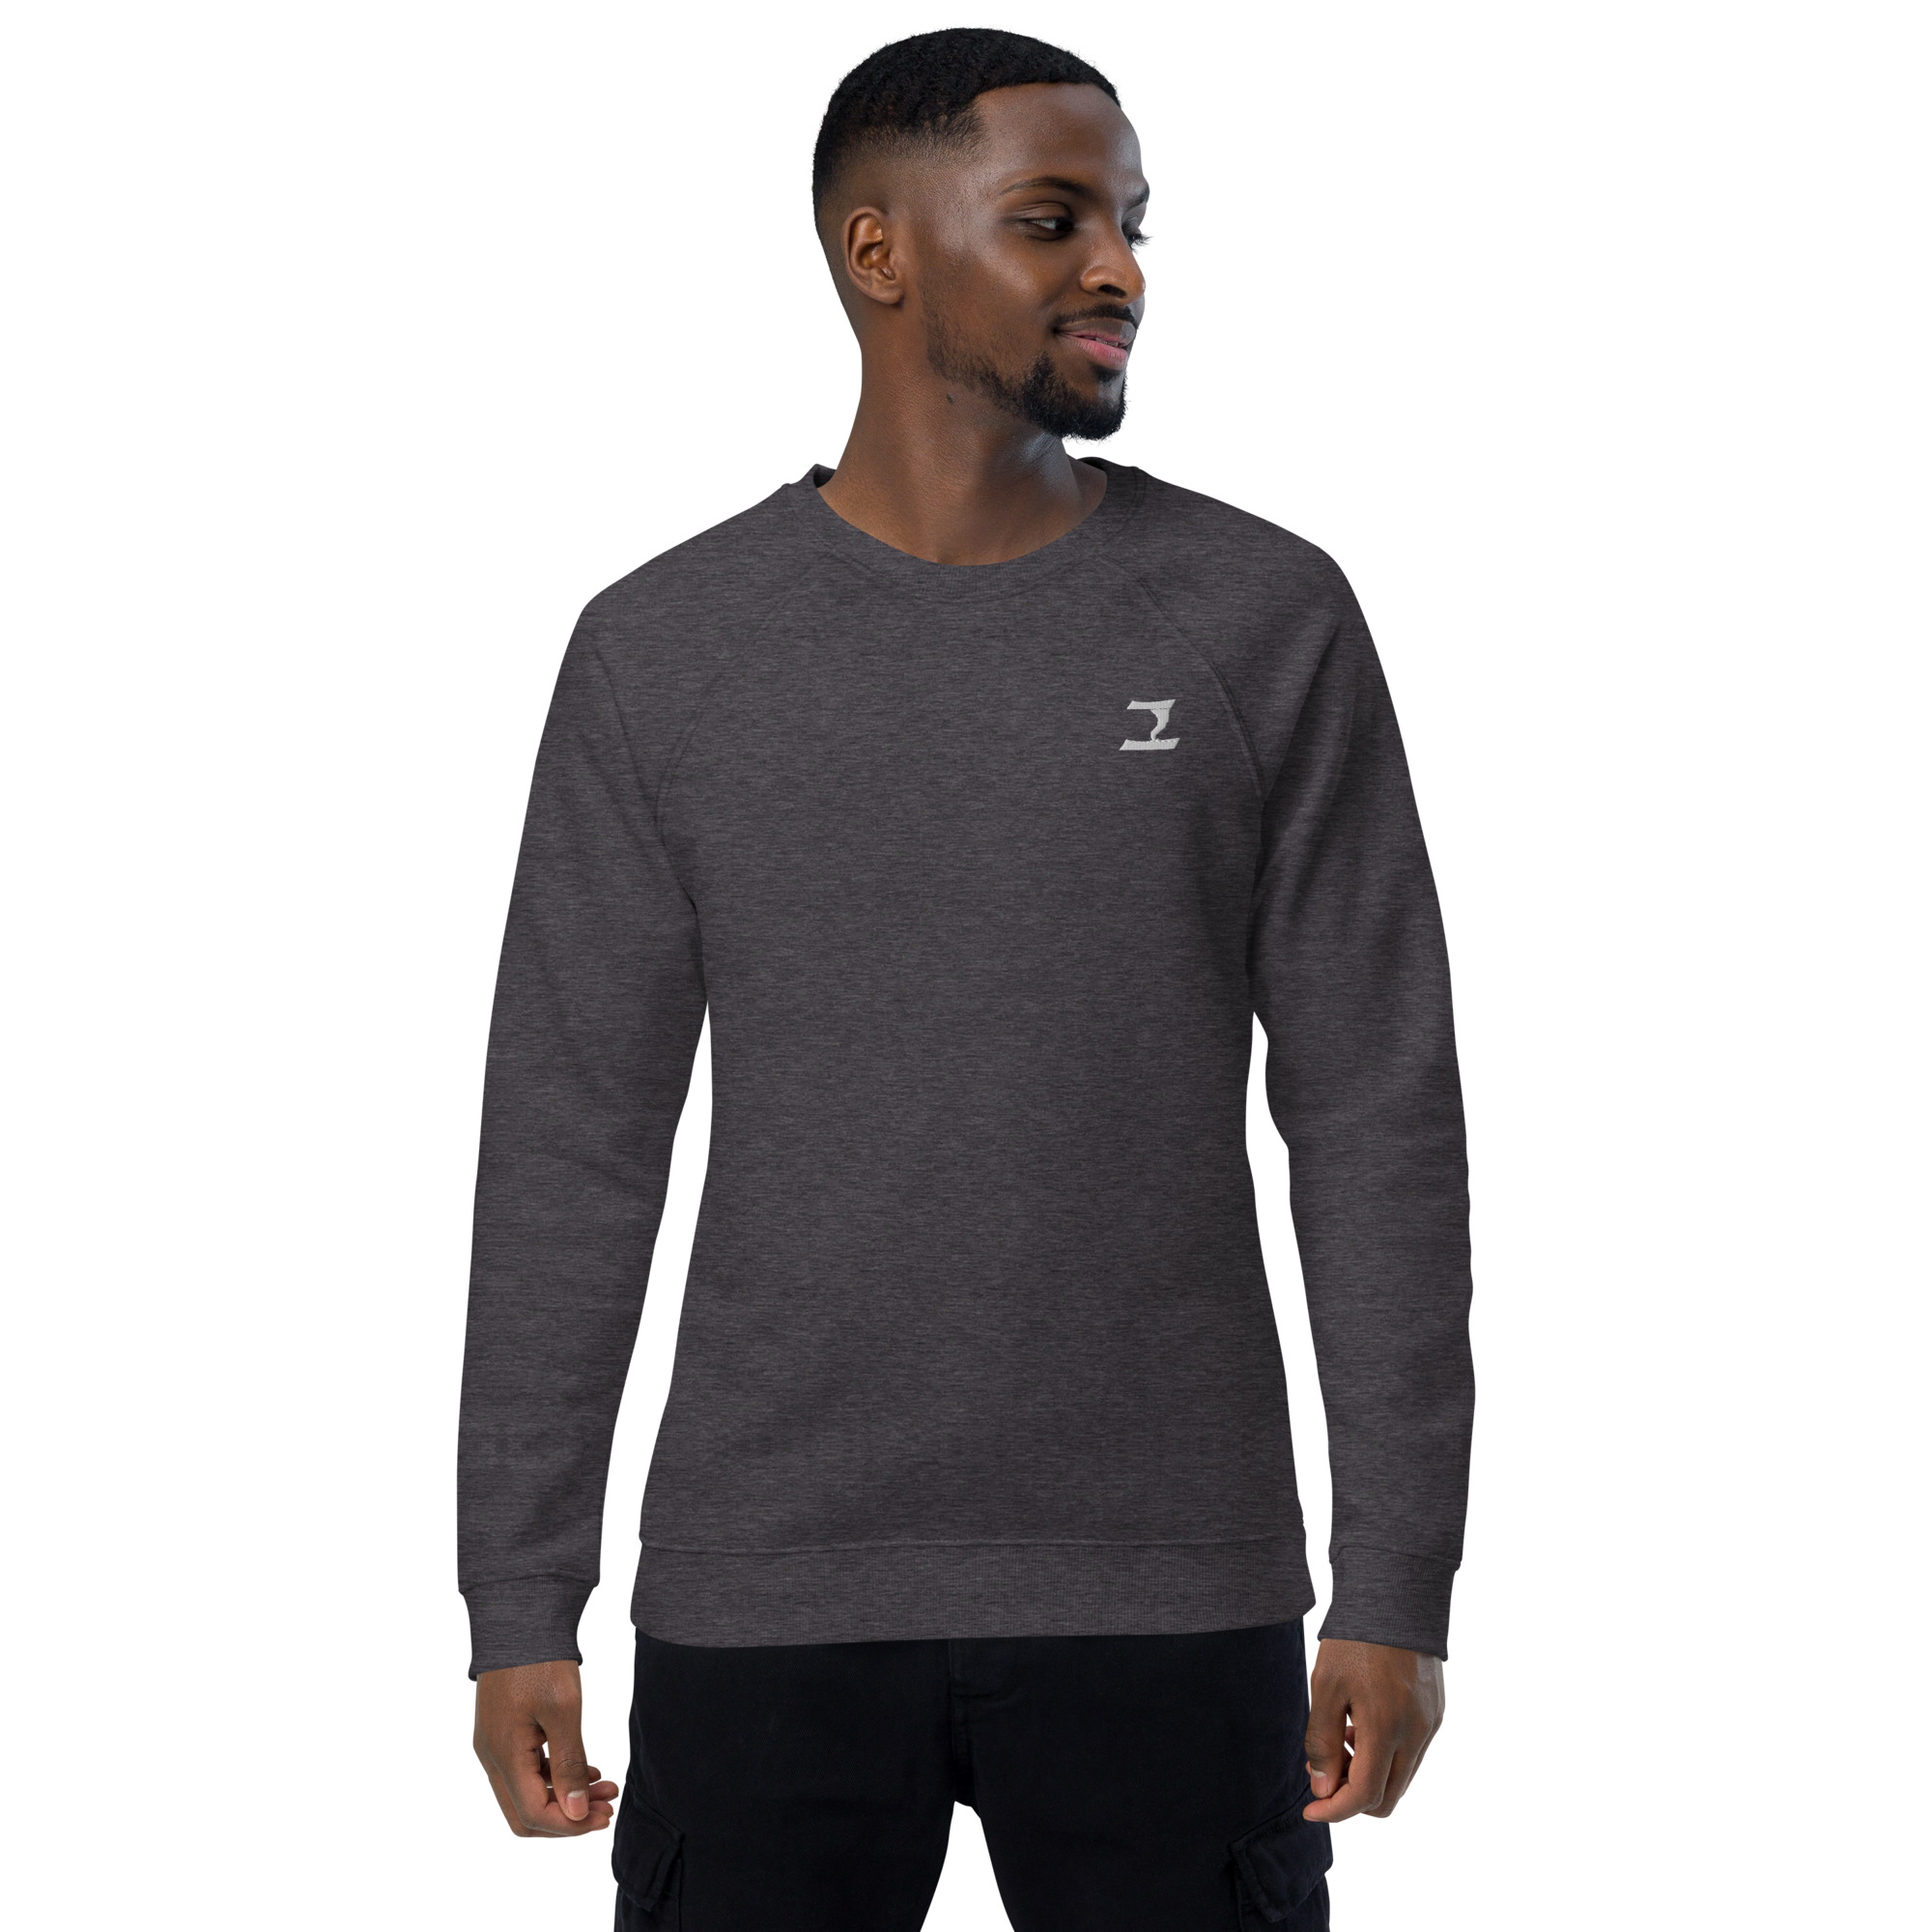 unisex-organic-raglan-sweatshirt-charcoal-melange-front-6334e2624b817.jpg